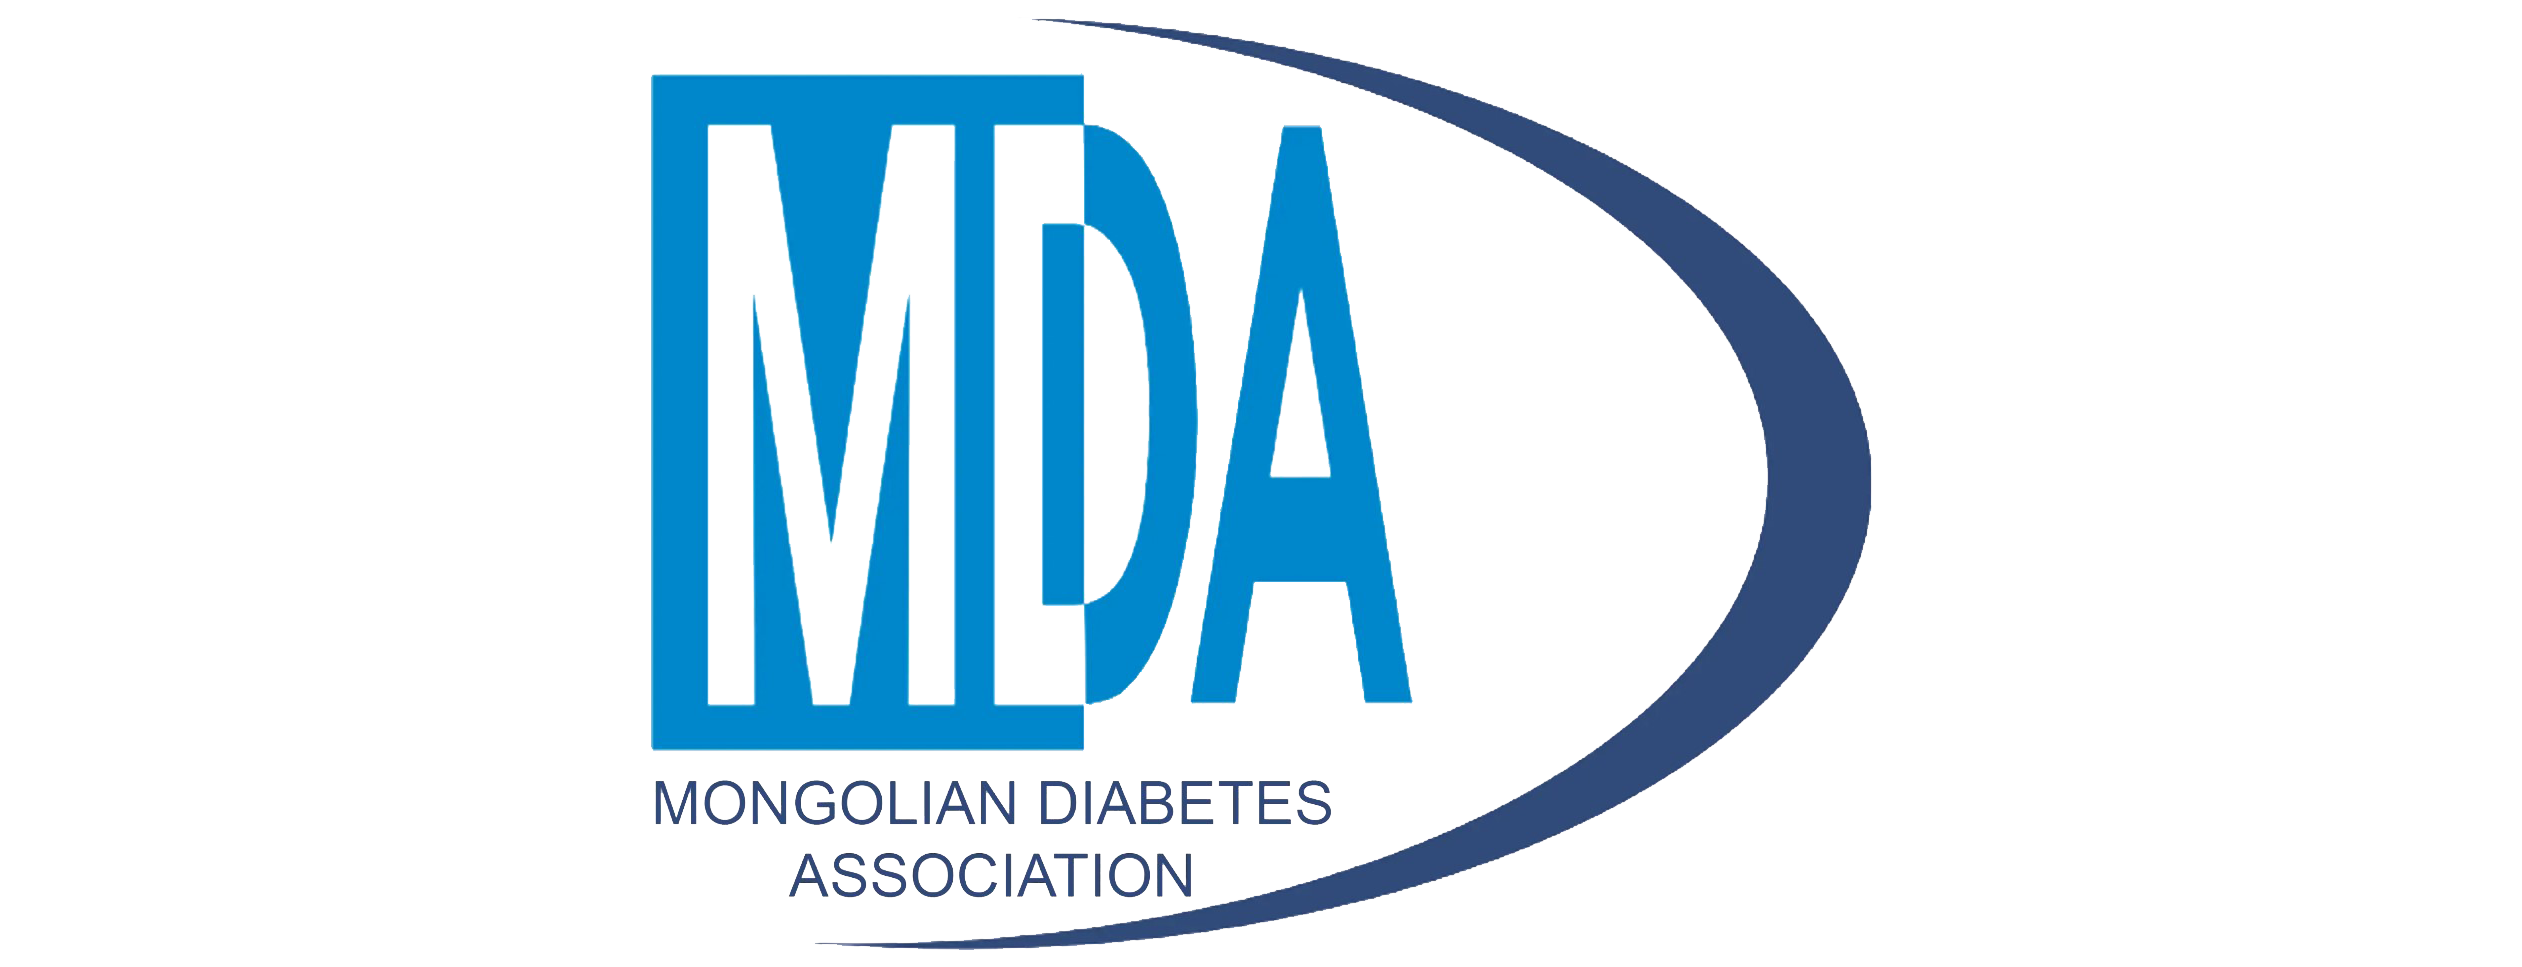 Mongolian Diabetes Association Logo